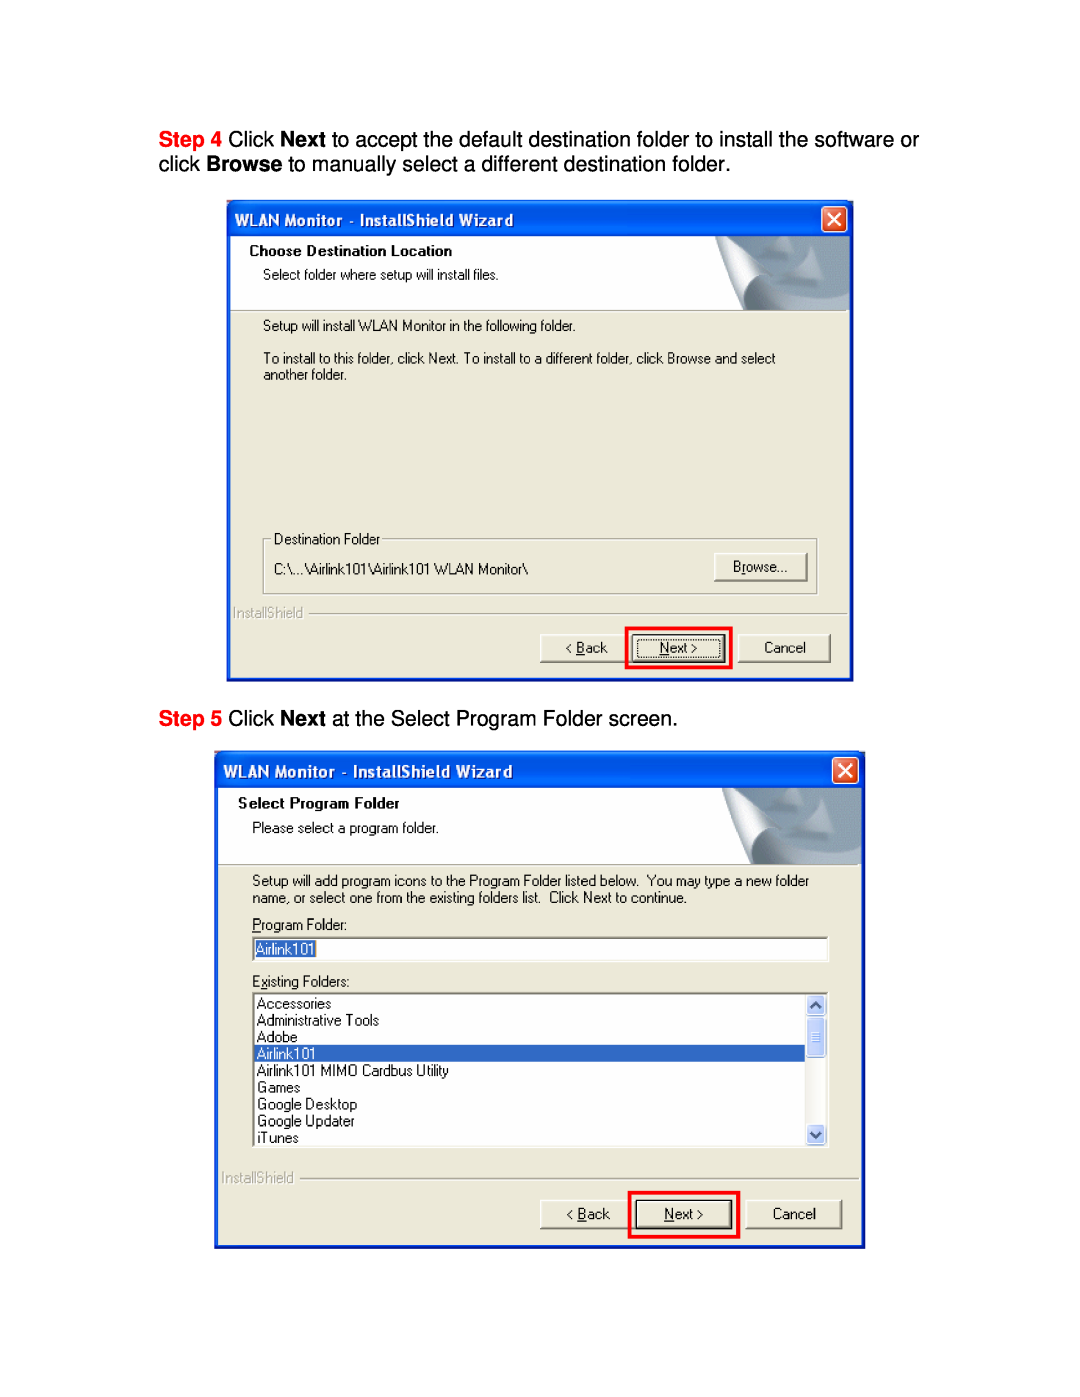 Airlink101 AWLH4130 user manual Click Next at the Select Program Folder screen 